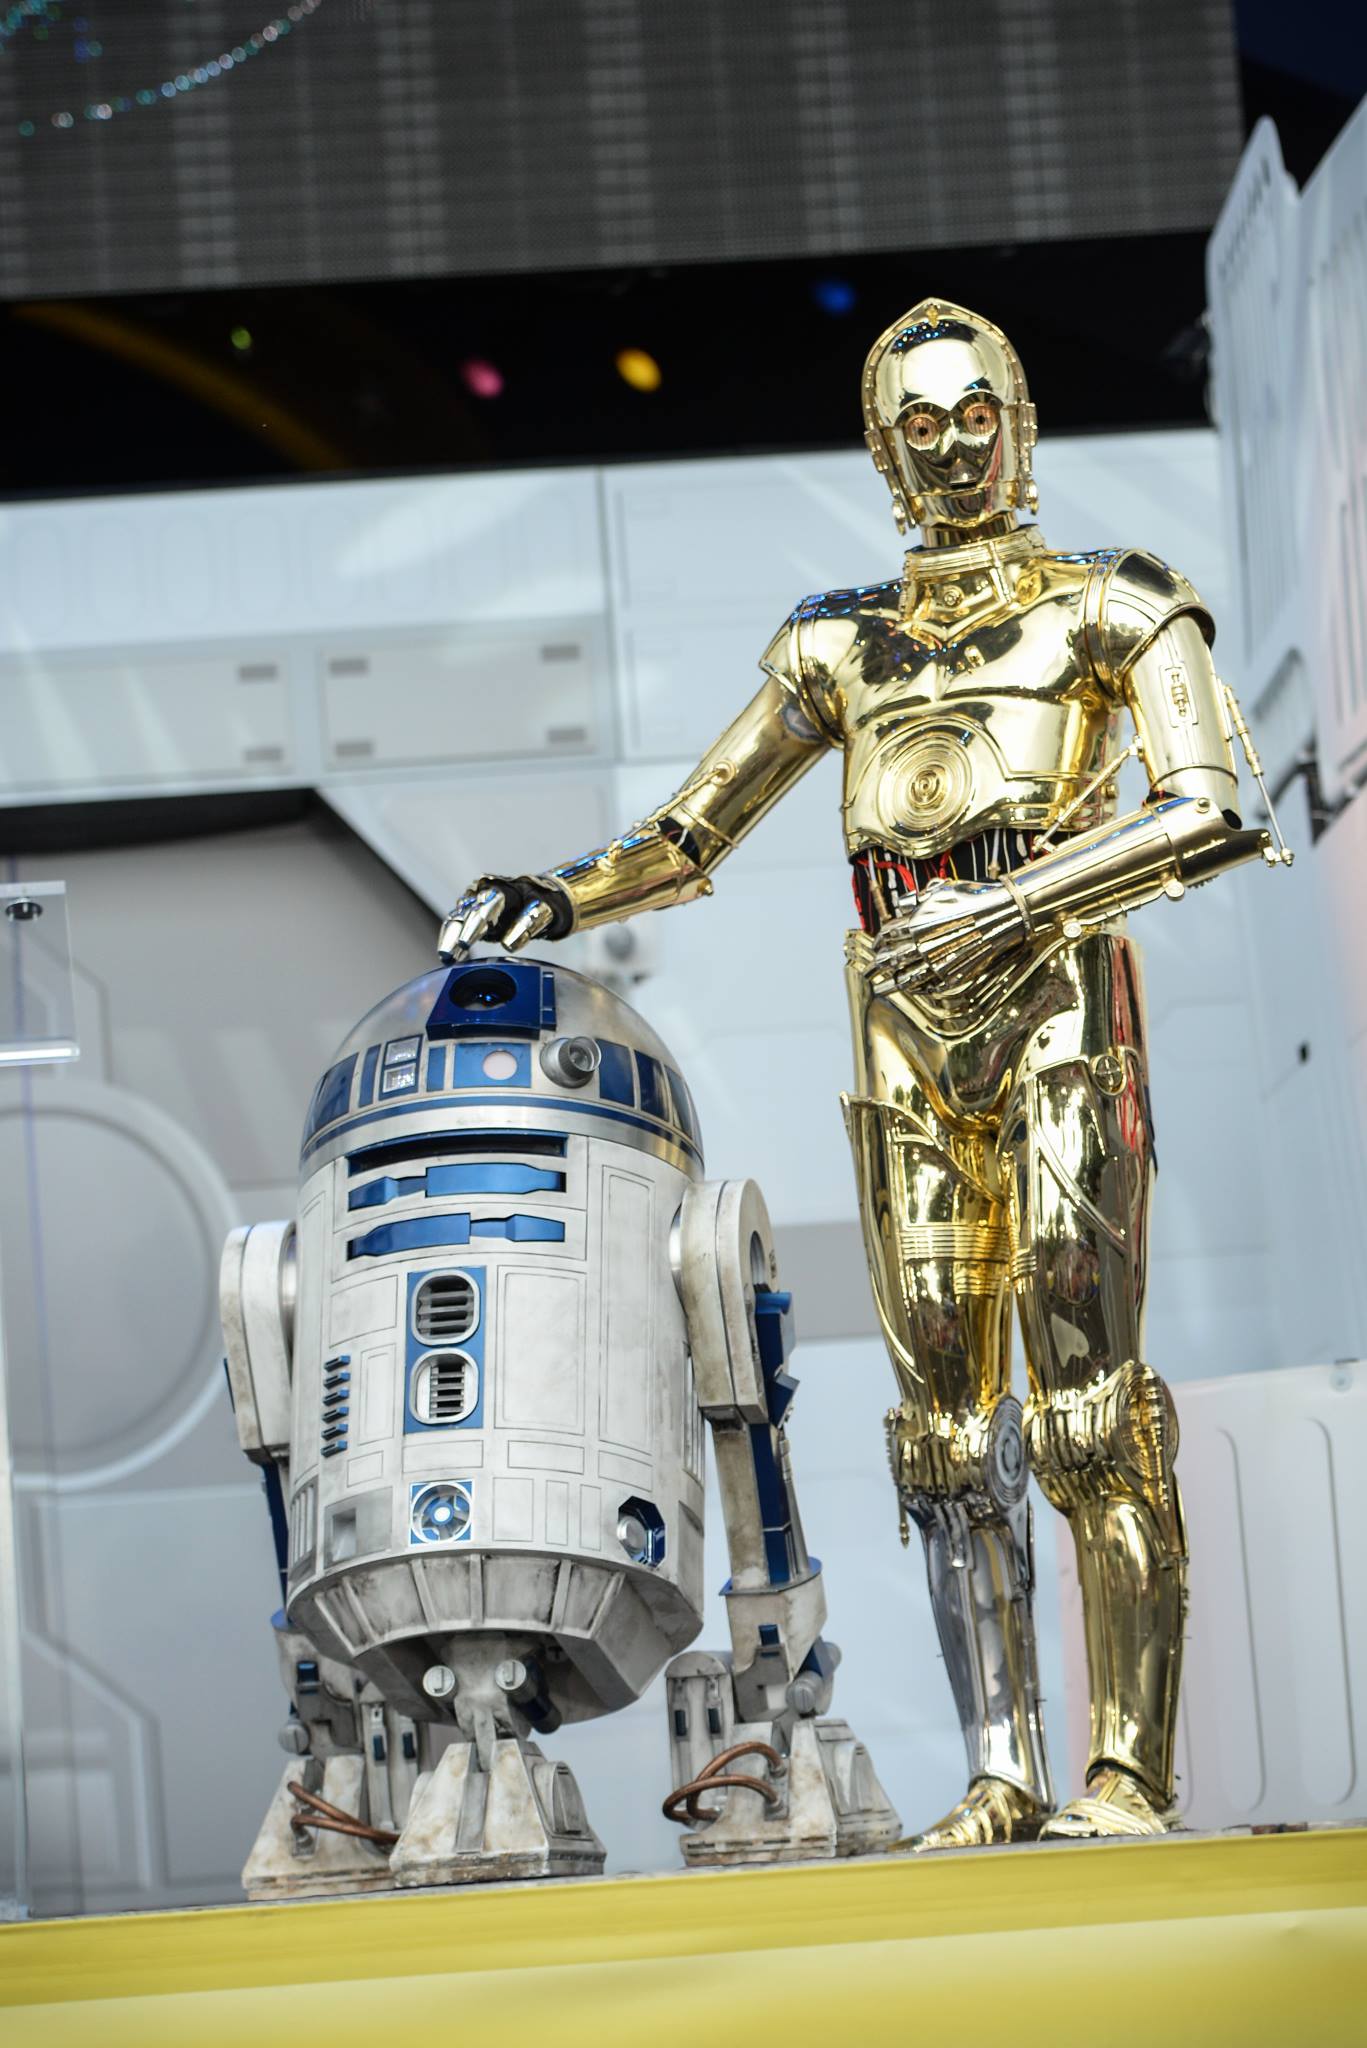 R2-D2 & C-3PO at Disney's Hollywood Studios